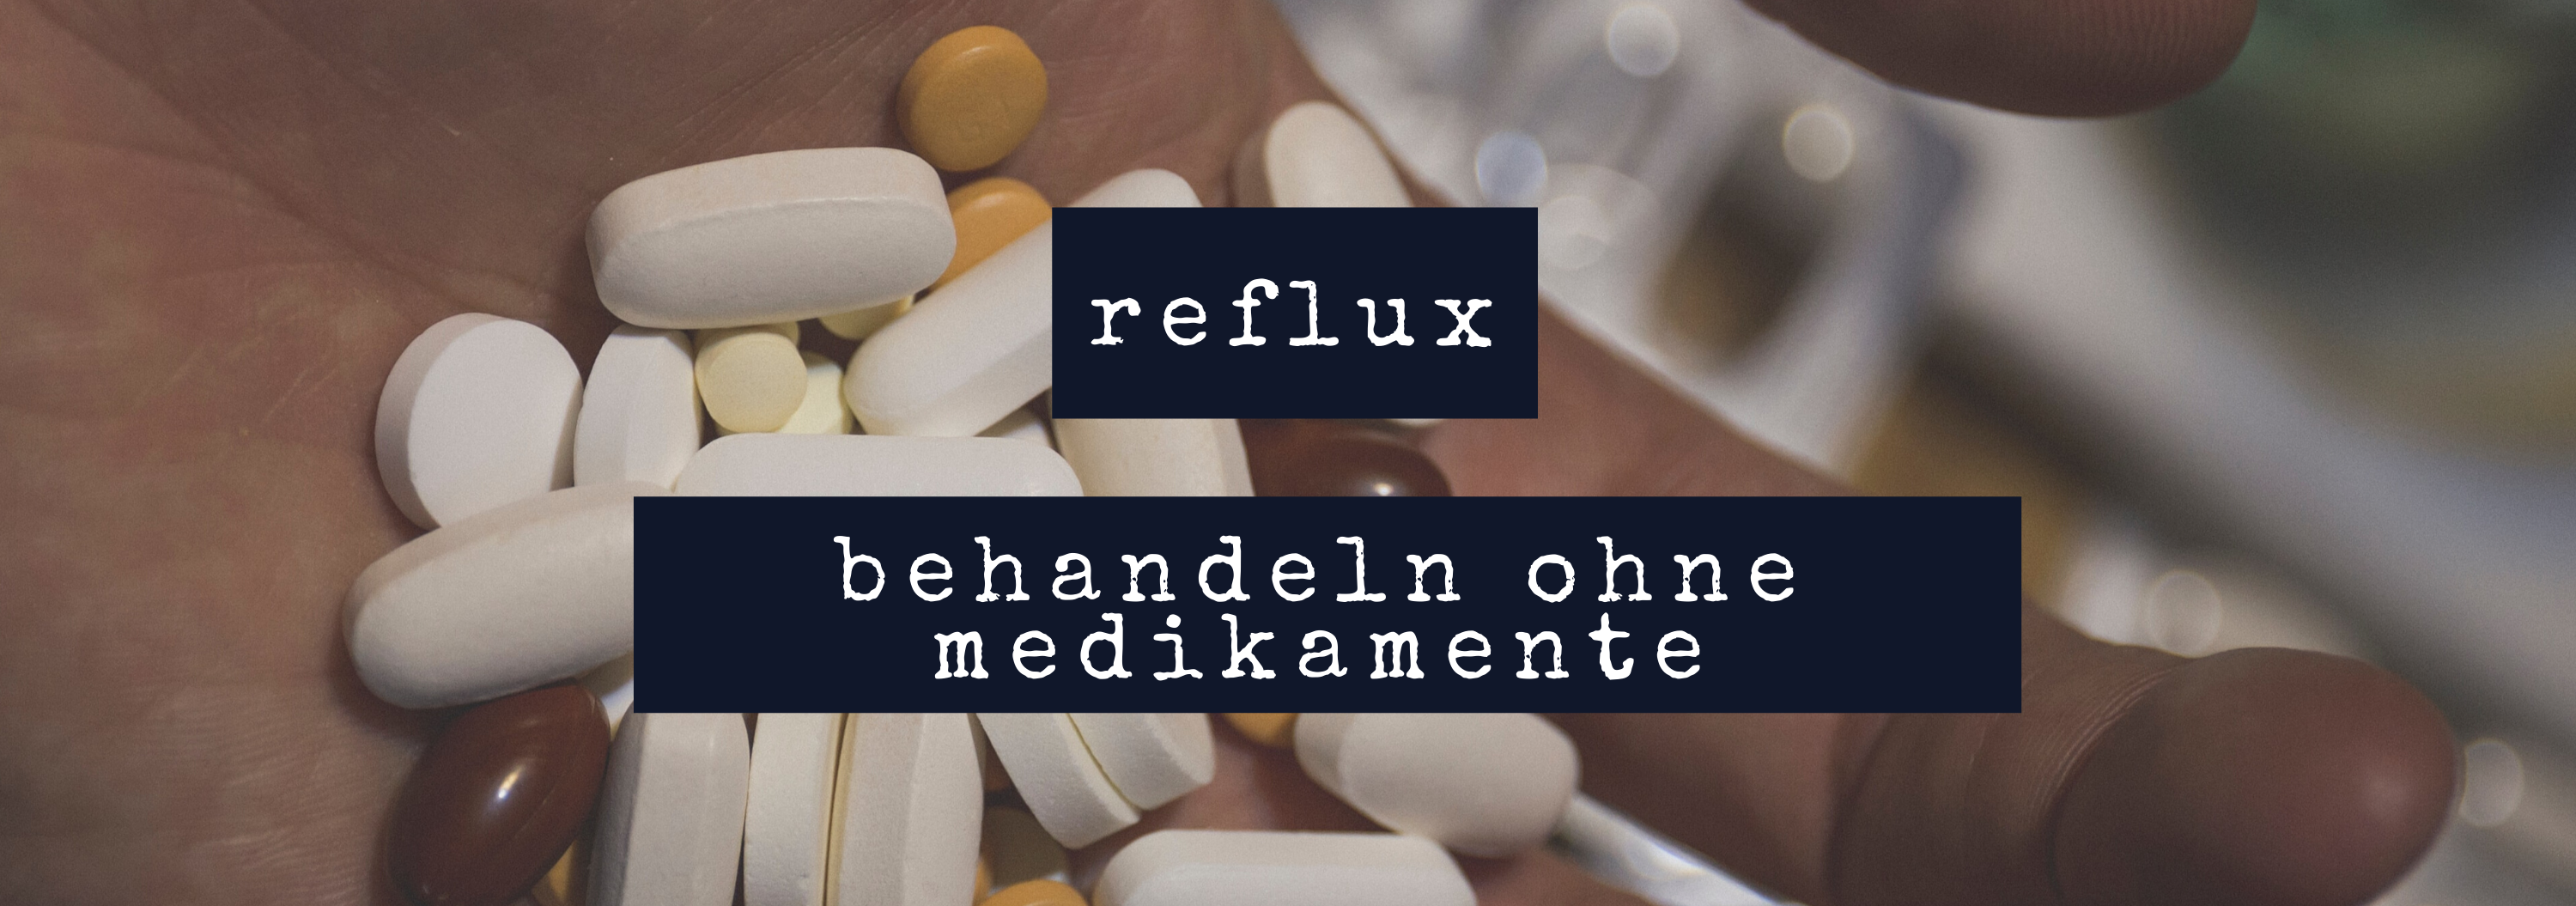 Reflux behandeln ohne Medikamente Banner - 5 Wege Reflux zu behandeln [ohne Medikamente] - wissenschaftlich belegt